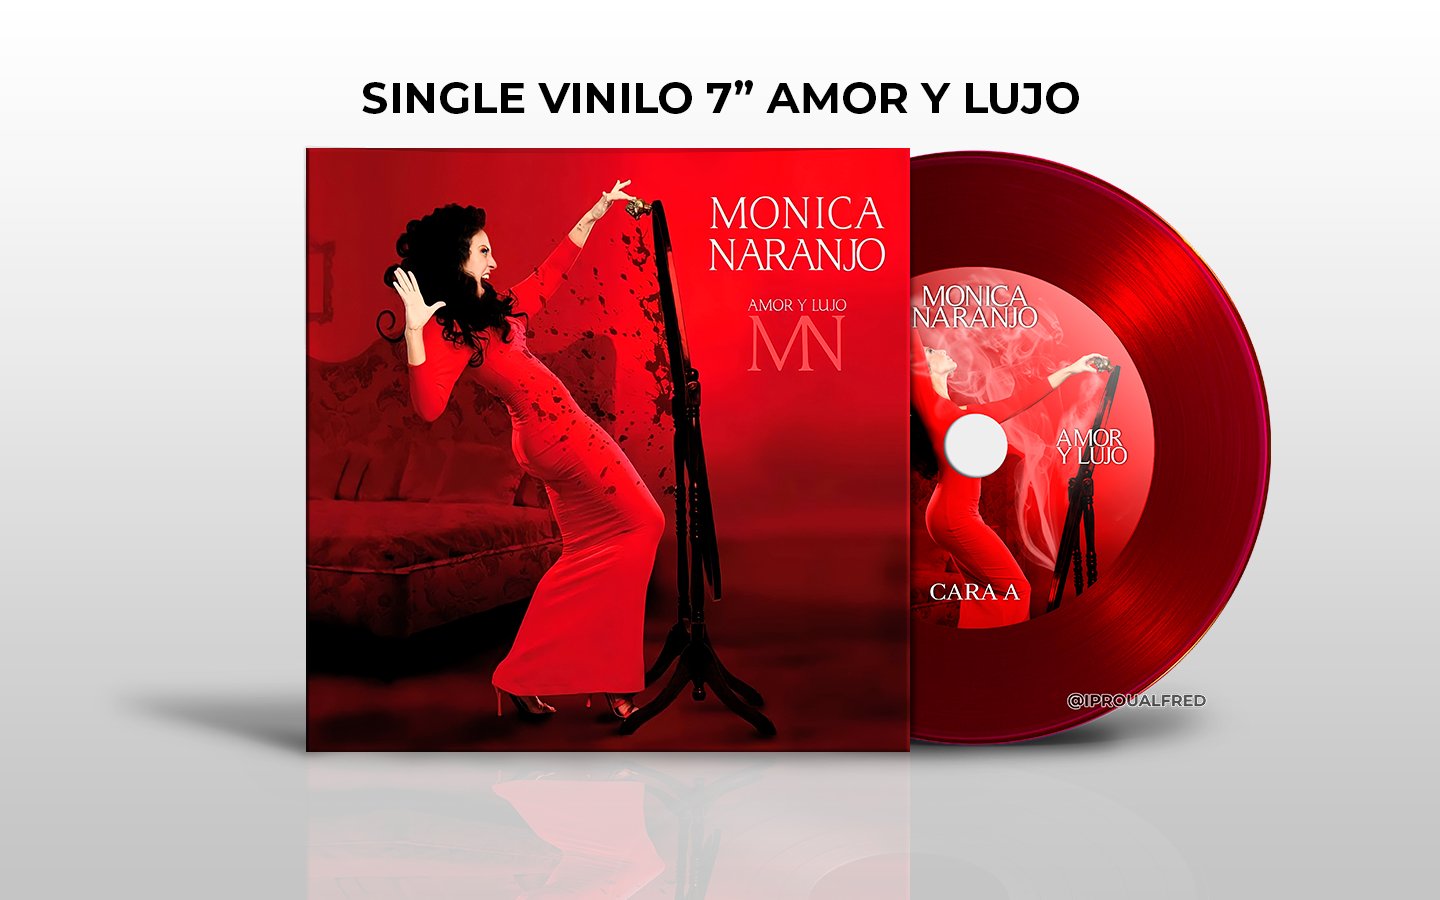 Sony Music editará 'Palabra de mujer' de Mónica Naranjo en formato vinilo